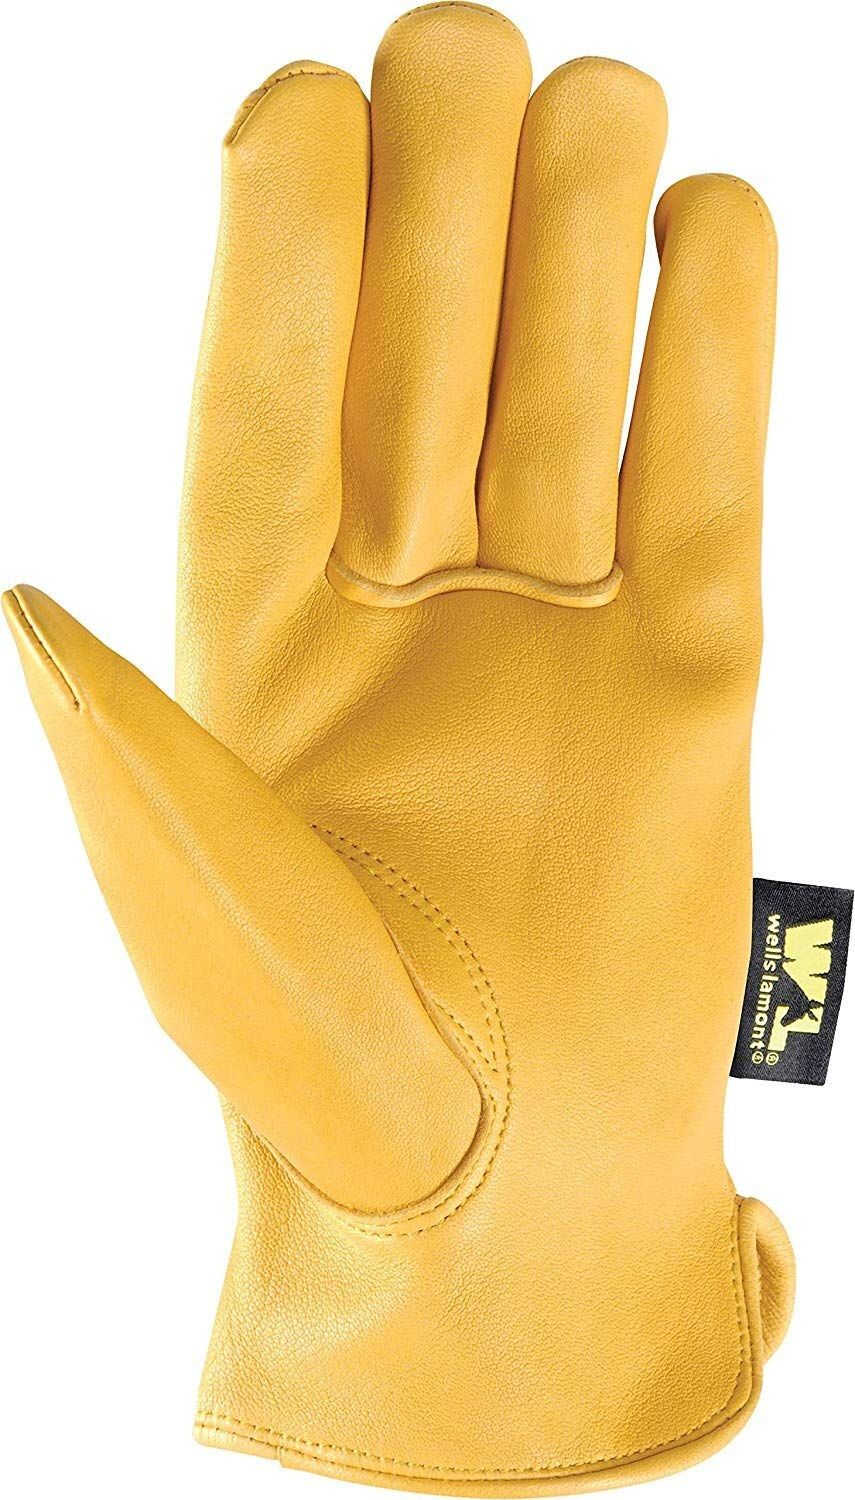 Men's Comforthyde Saddletan Grain Leather Driving Gloves